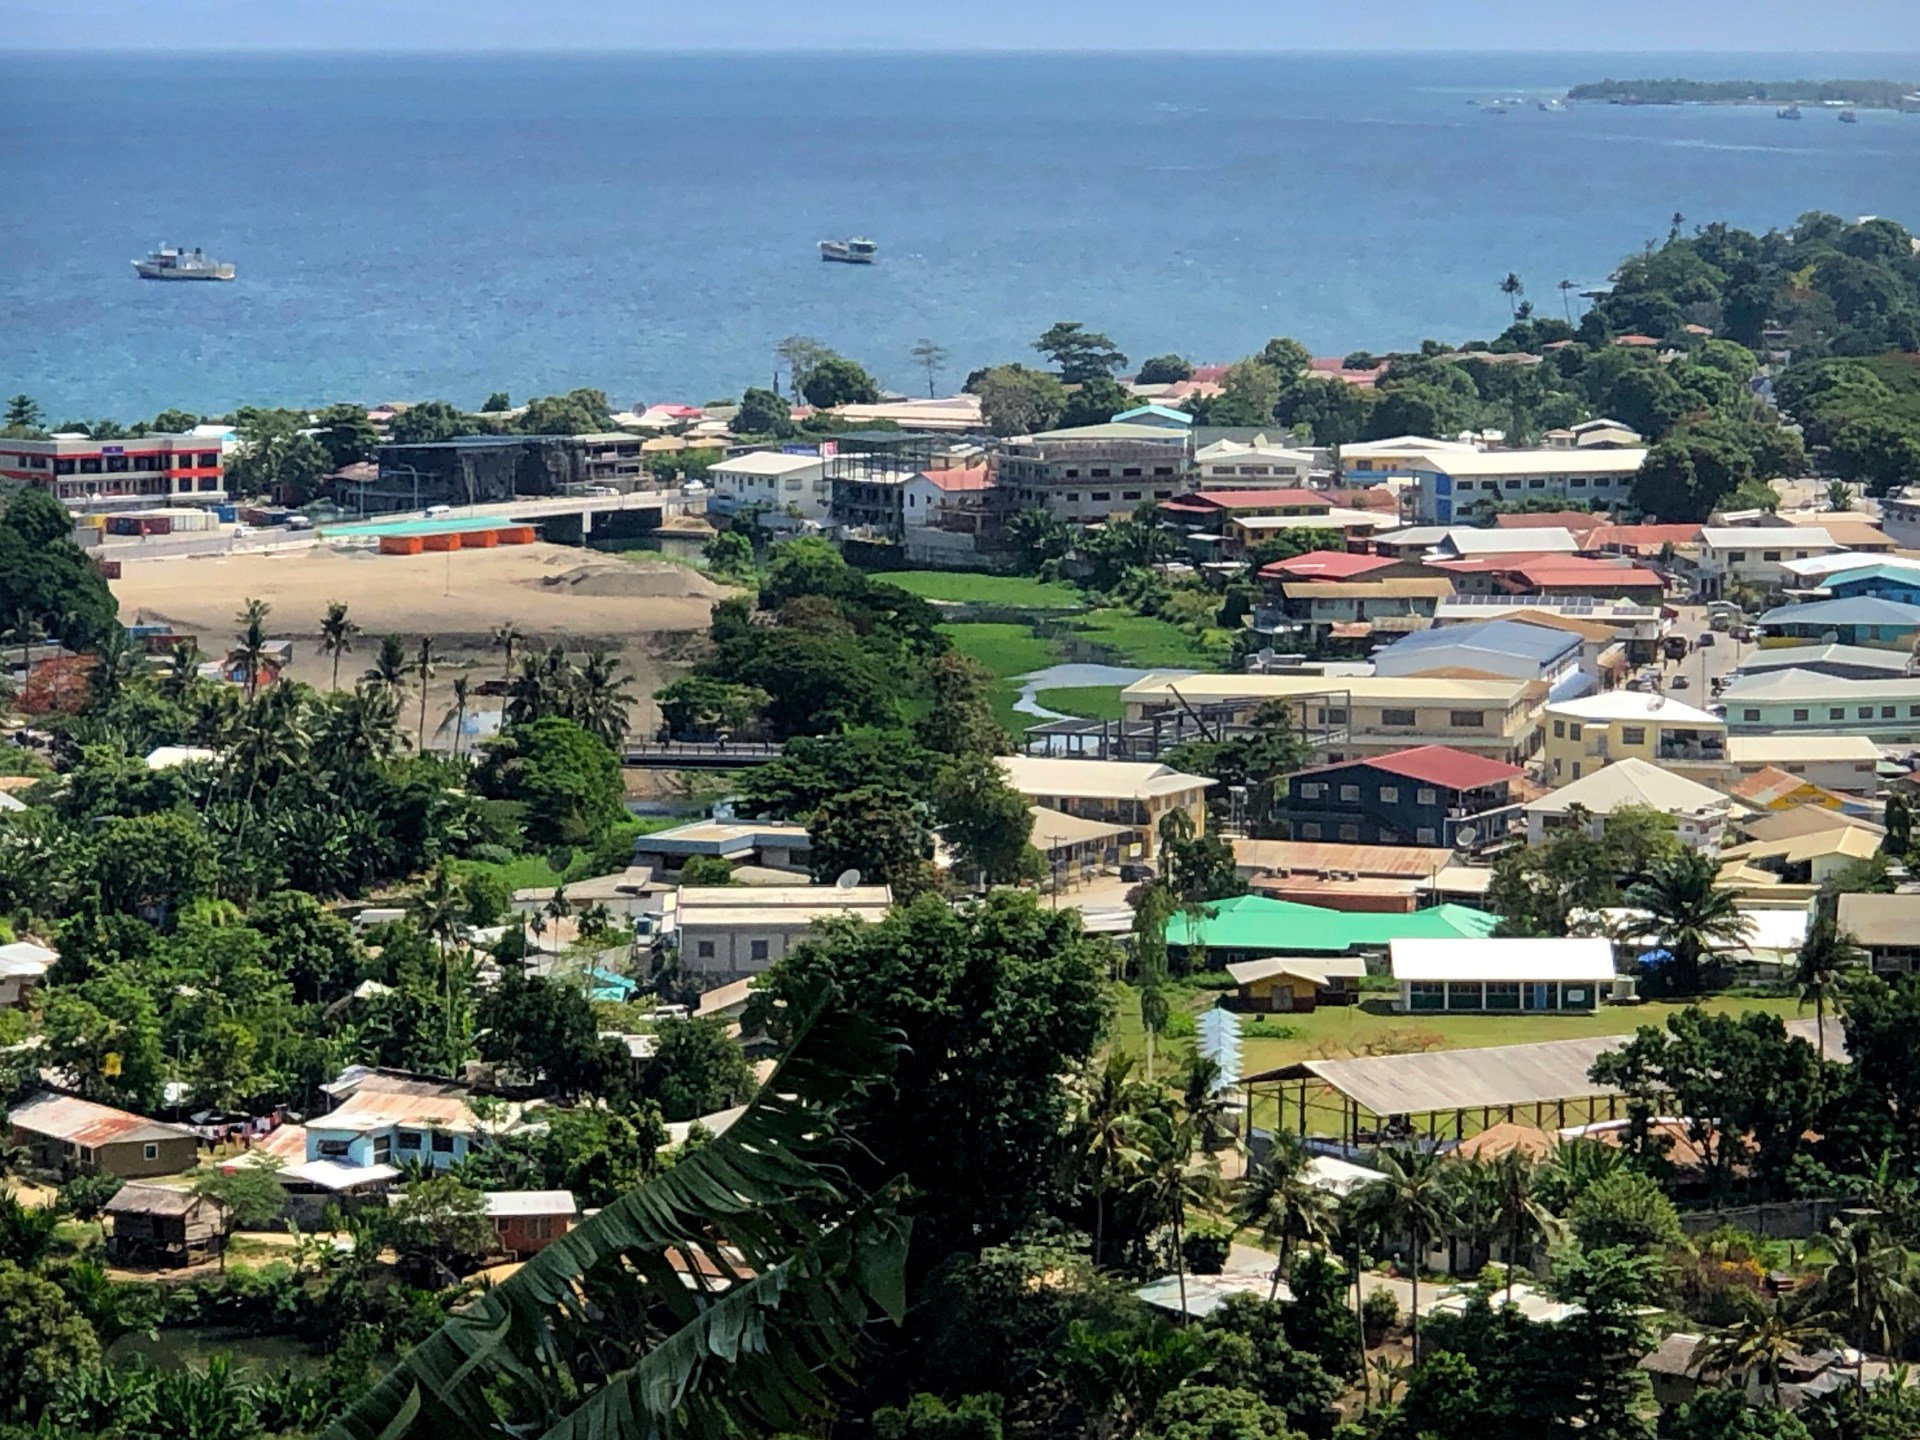 Solomon Islands shaken by huge earthquake, tsunami alert issued